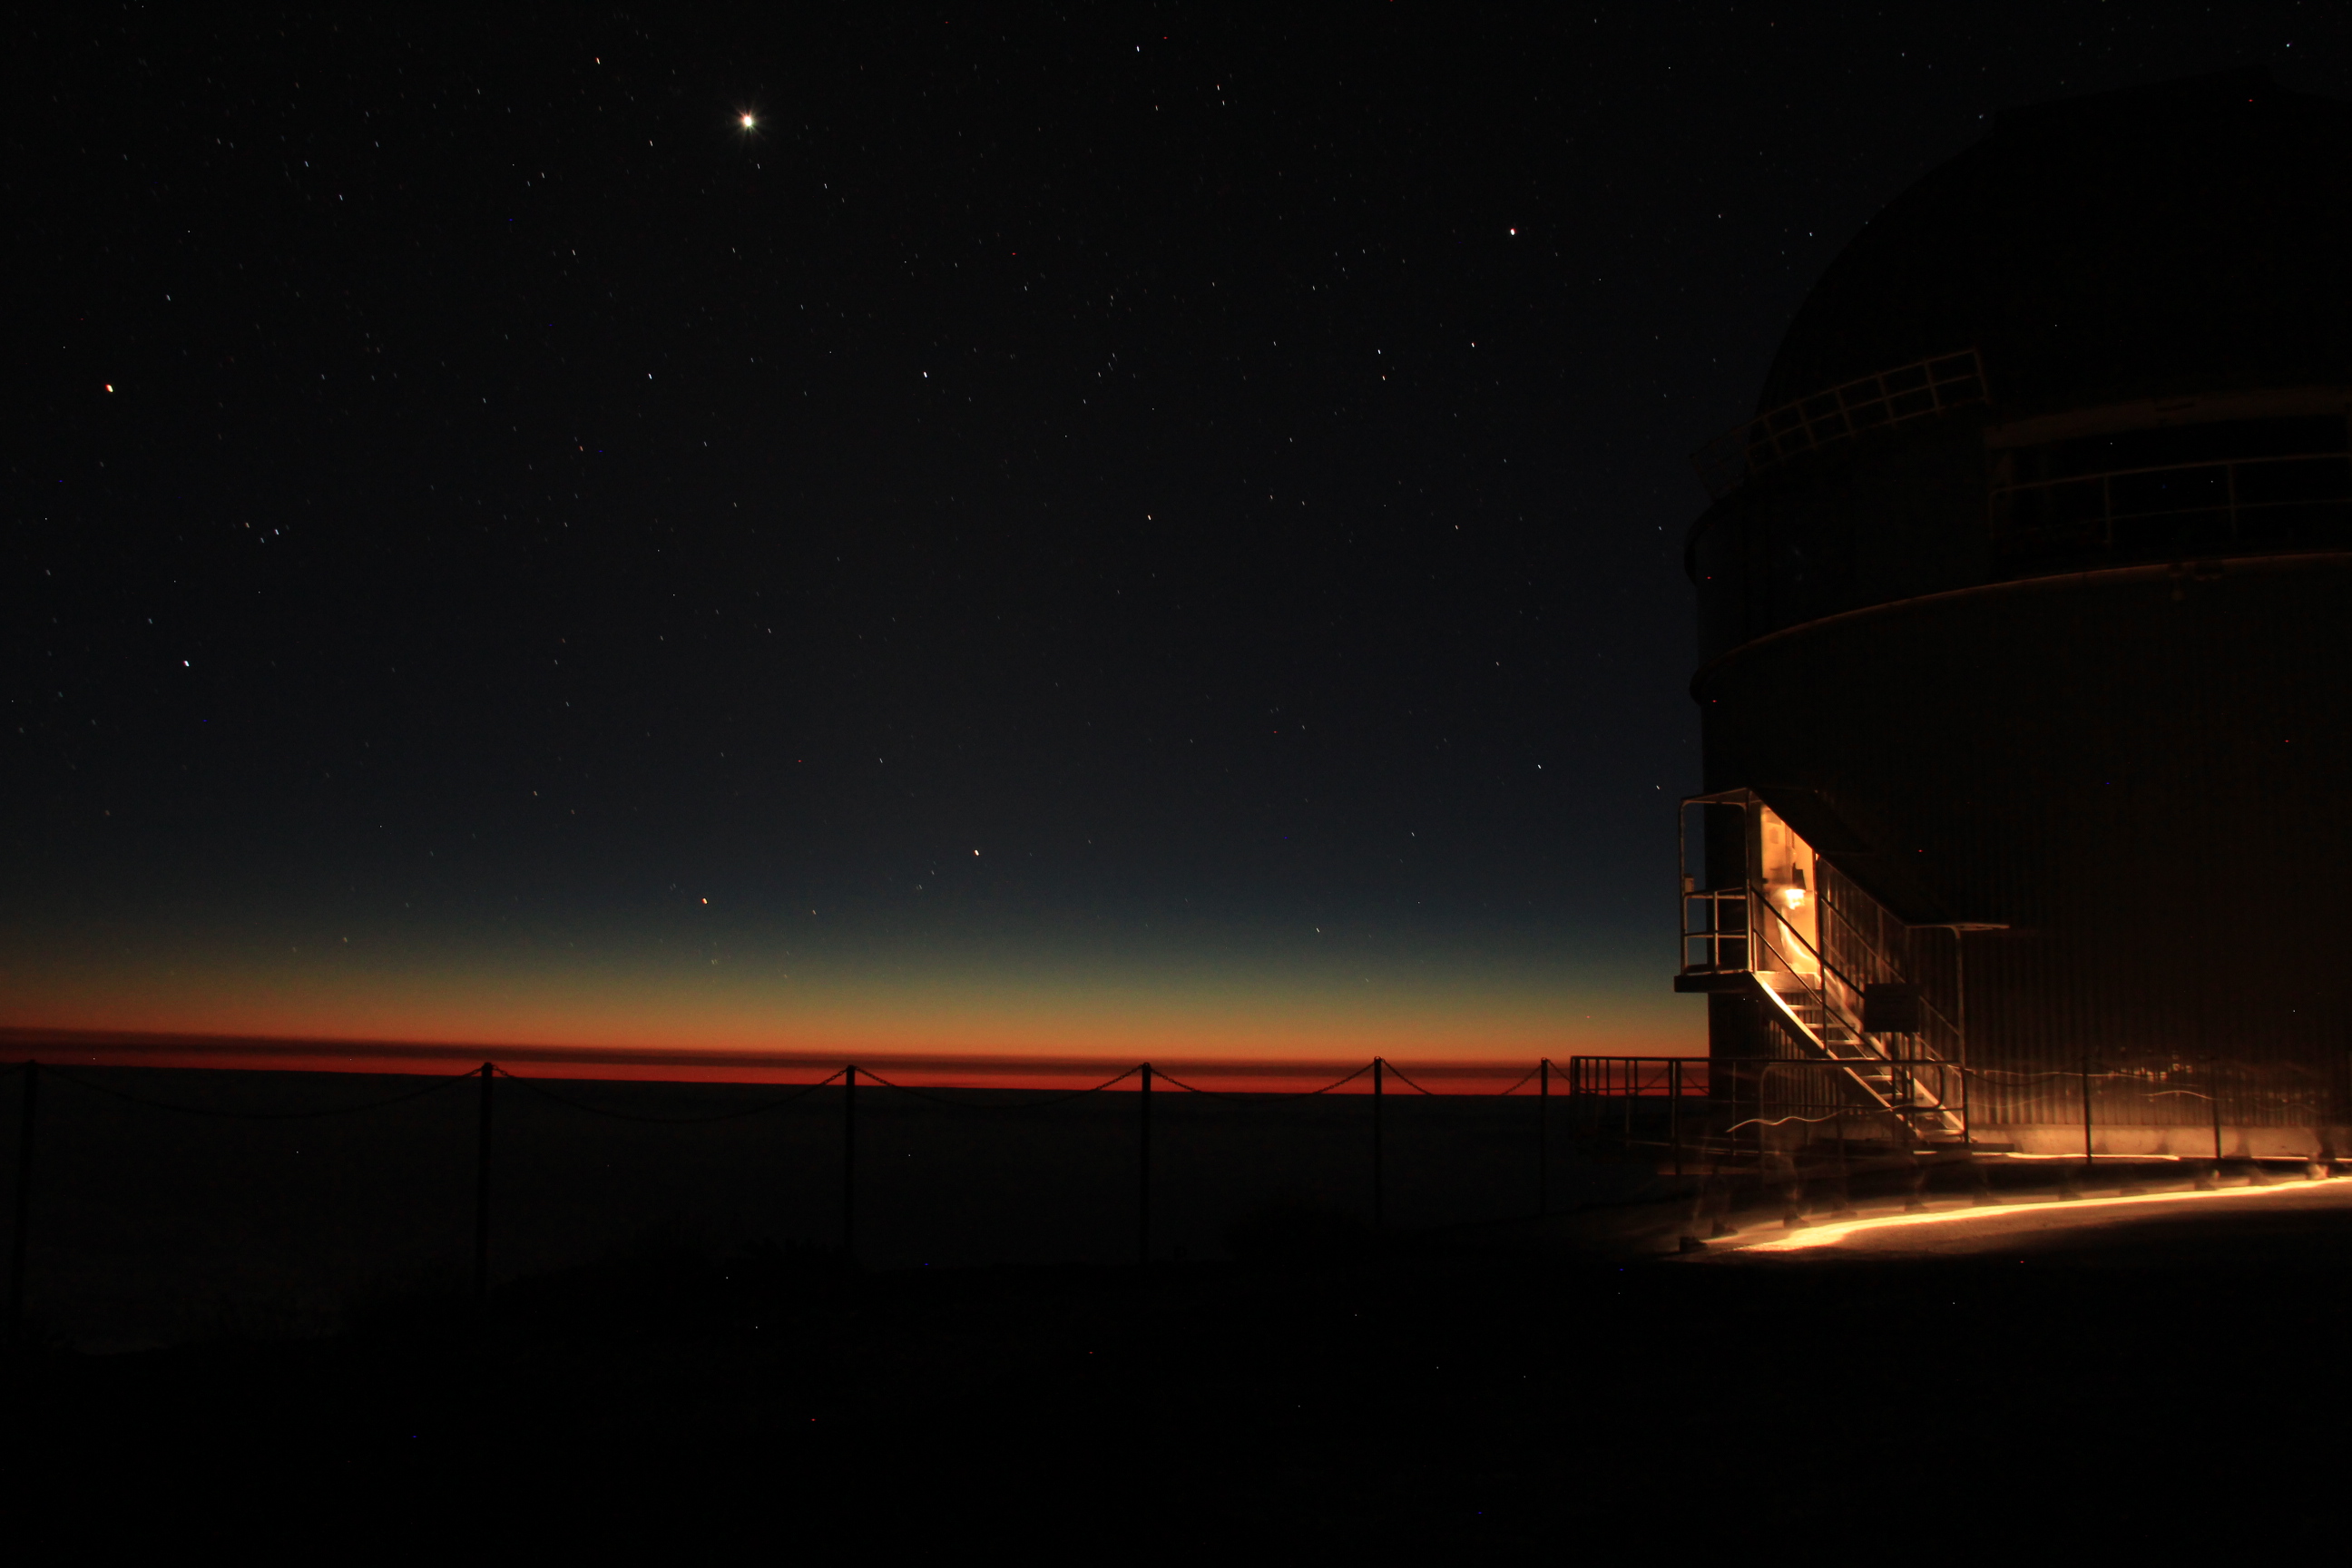 Nordic optical telescope at sunset.